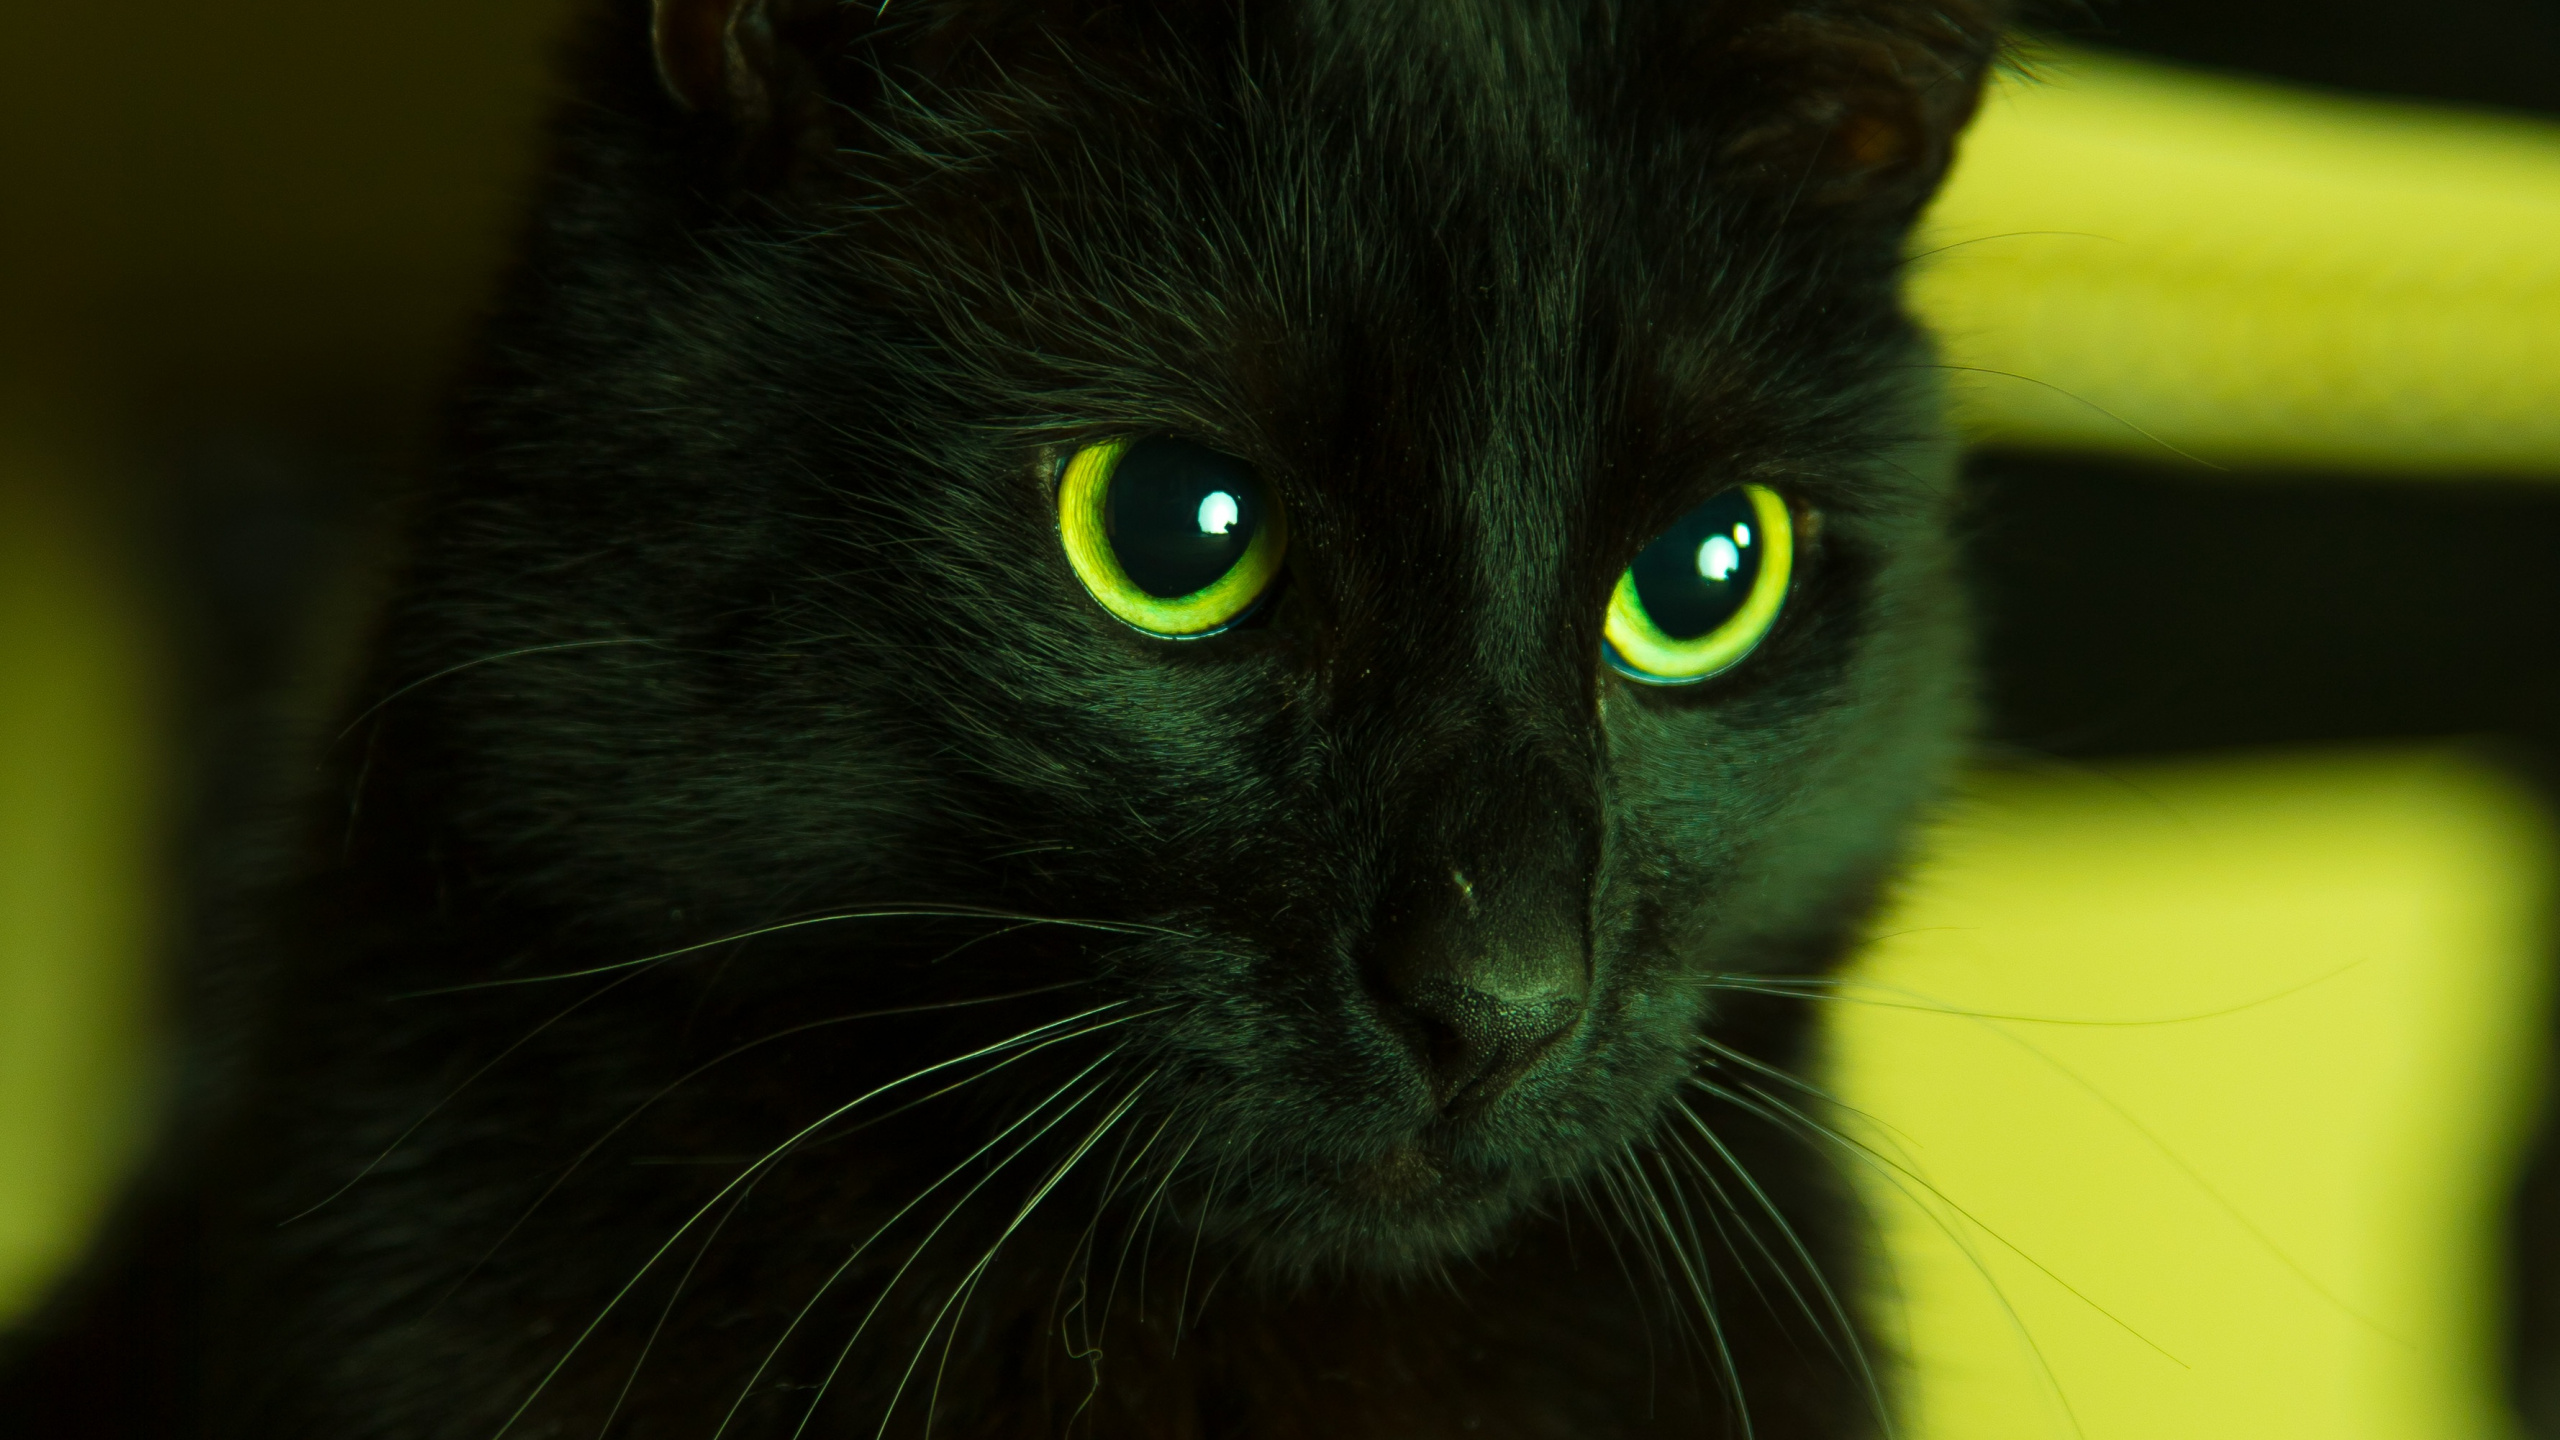 Black Cat in Tilt Shift Lens. Wallpaper in 2560x1440 Resolution